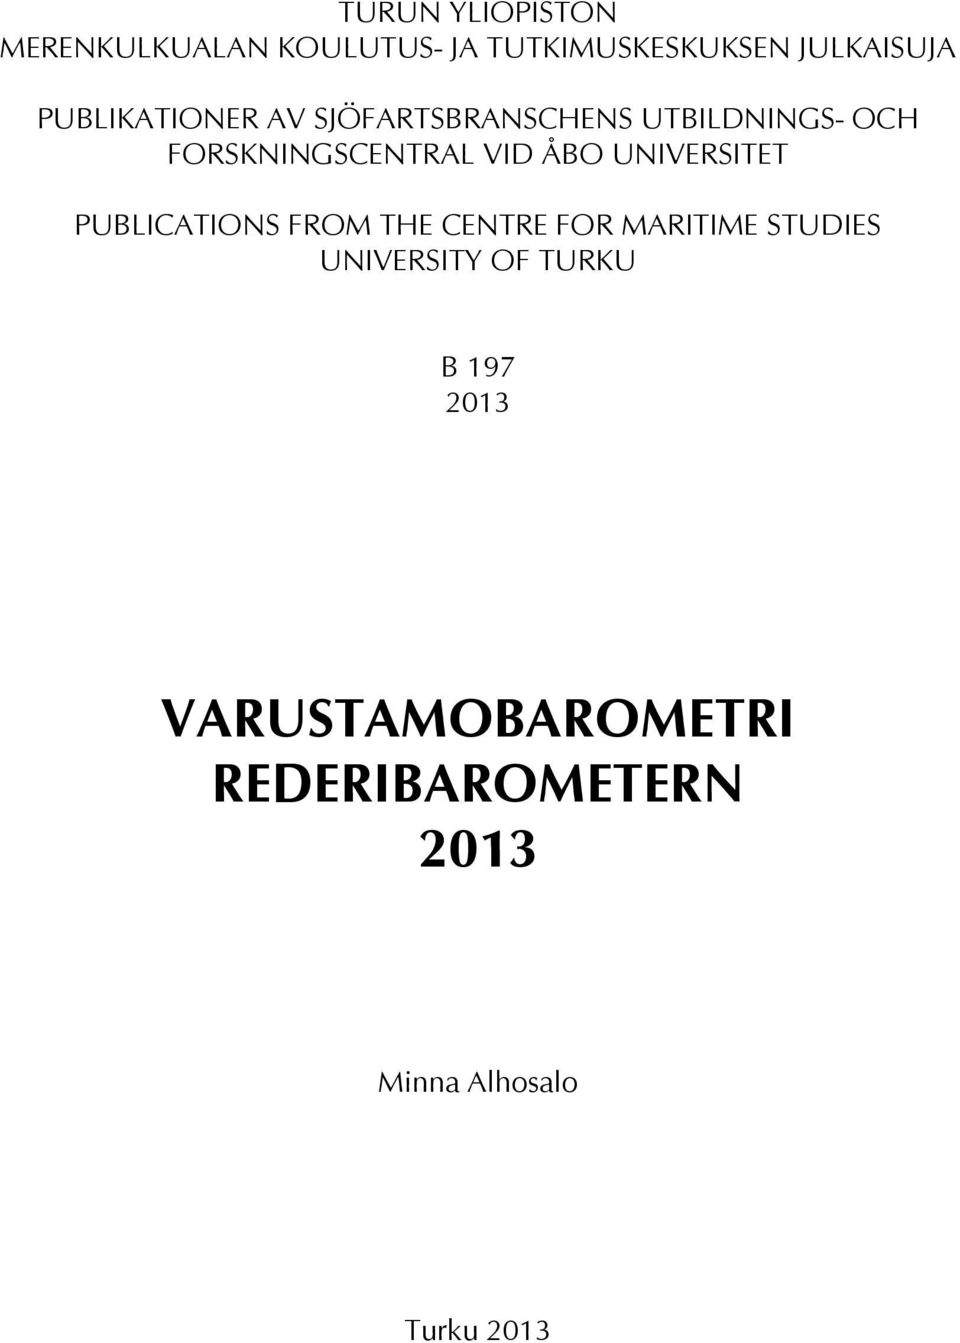 ÅBO UNIVERSITET PUBLICATIONS FROM THE CENTRE FOR MARITIME STUDIES UNIVERSITY